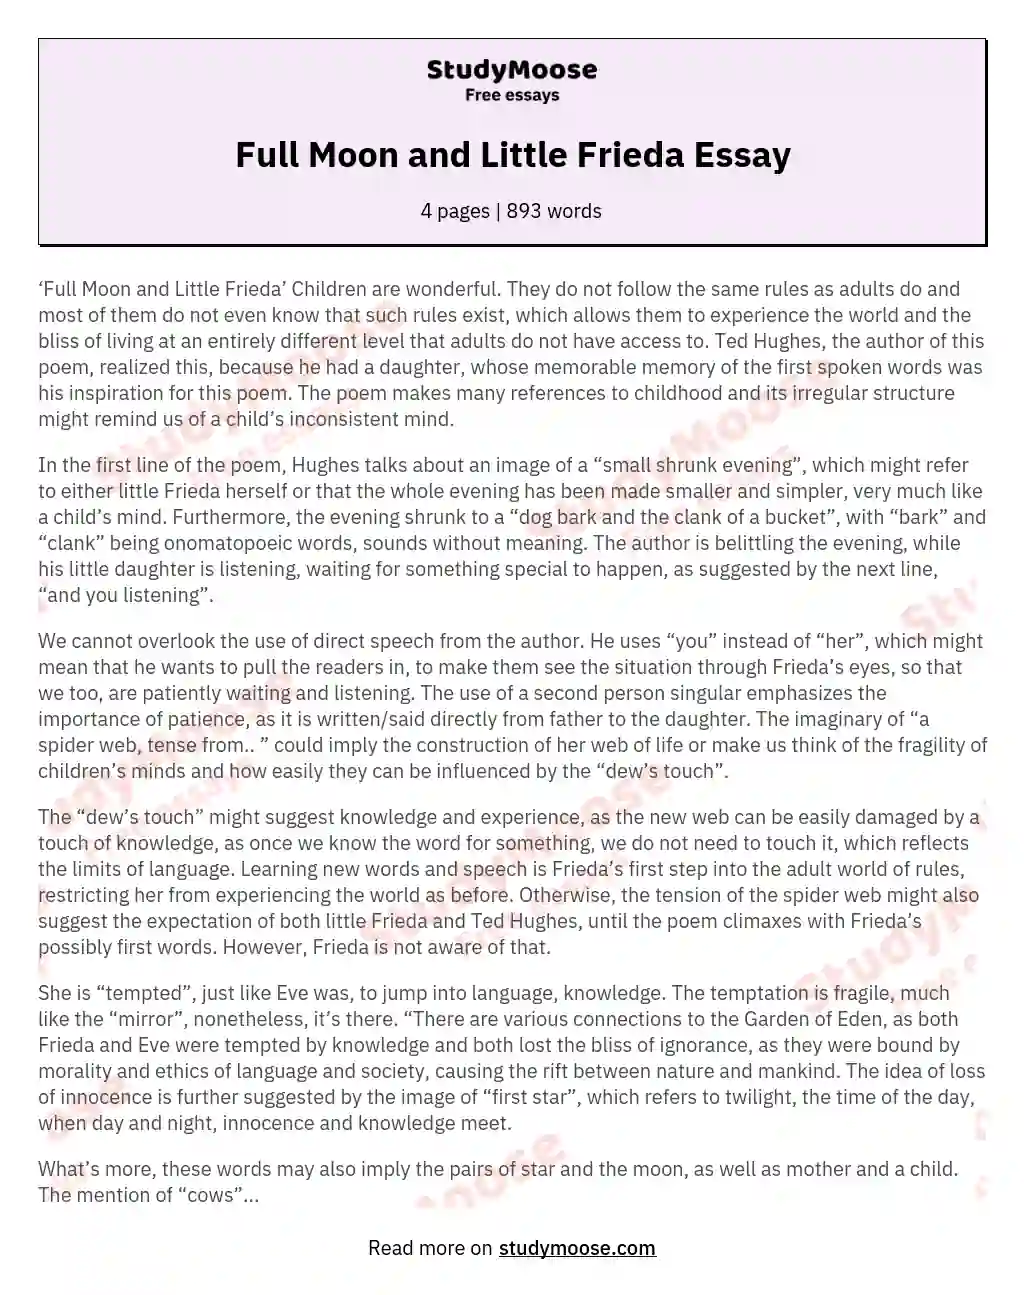 Full Moon and Little Frieda Essay essay